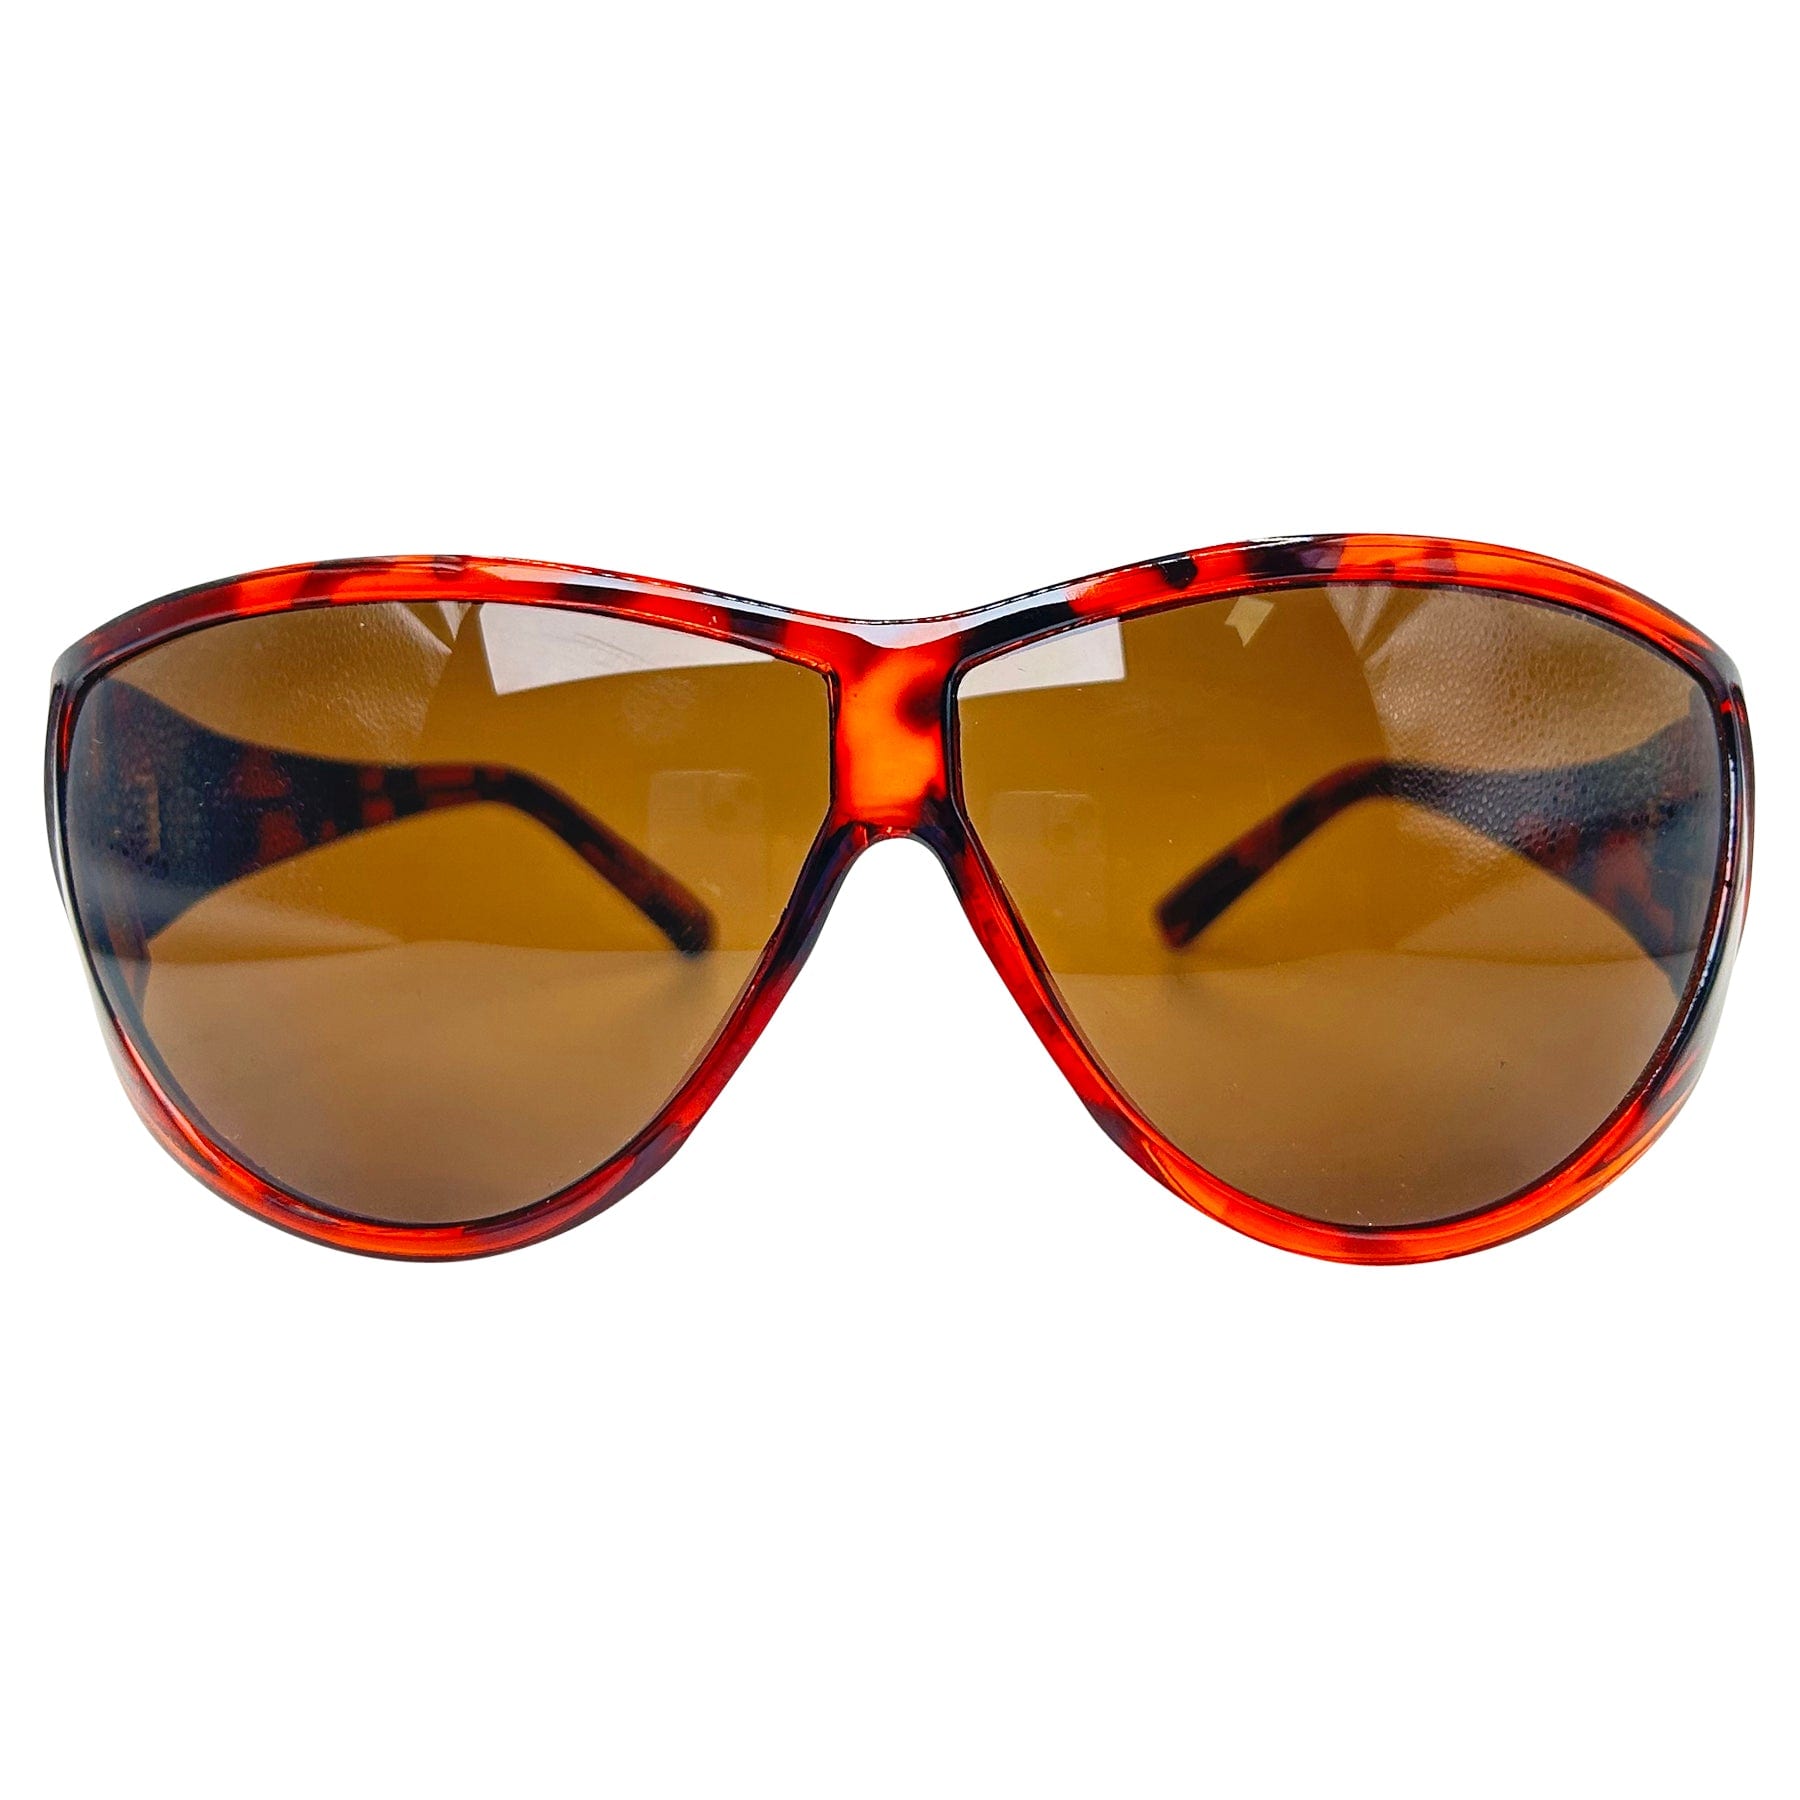 QUI-HO Tortoise/Brown Vintage Sports Sunglasses